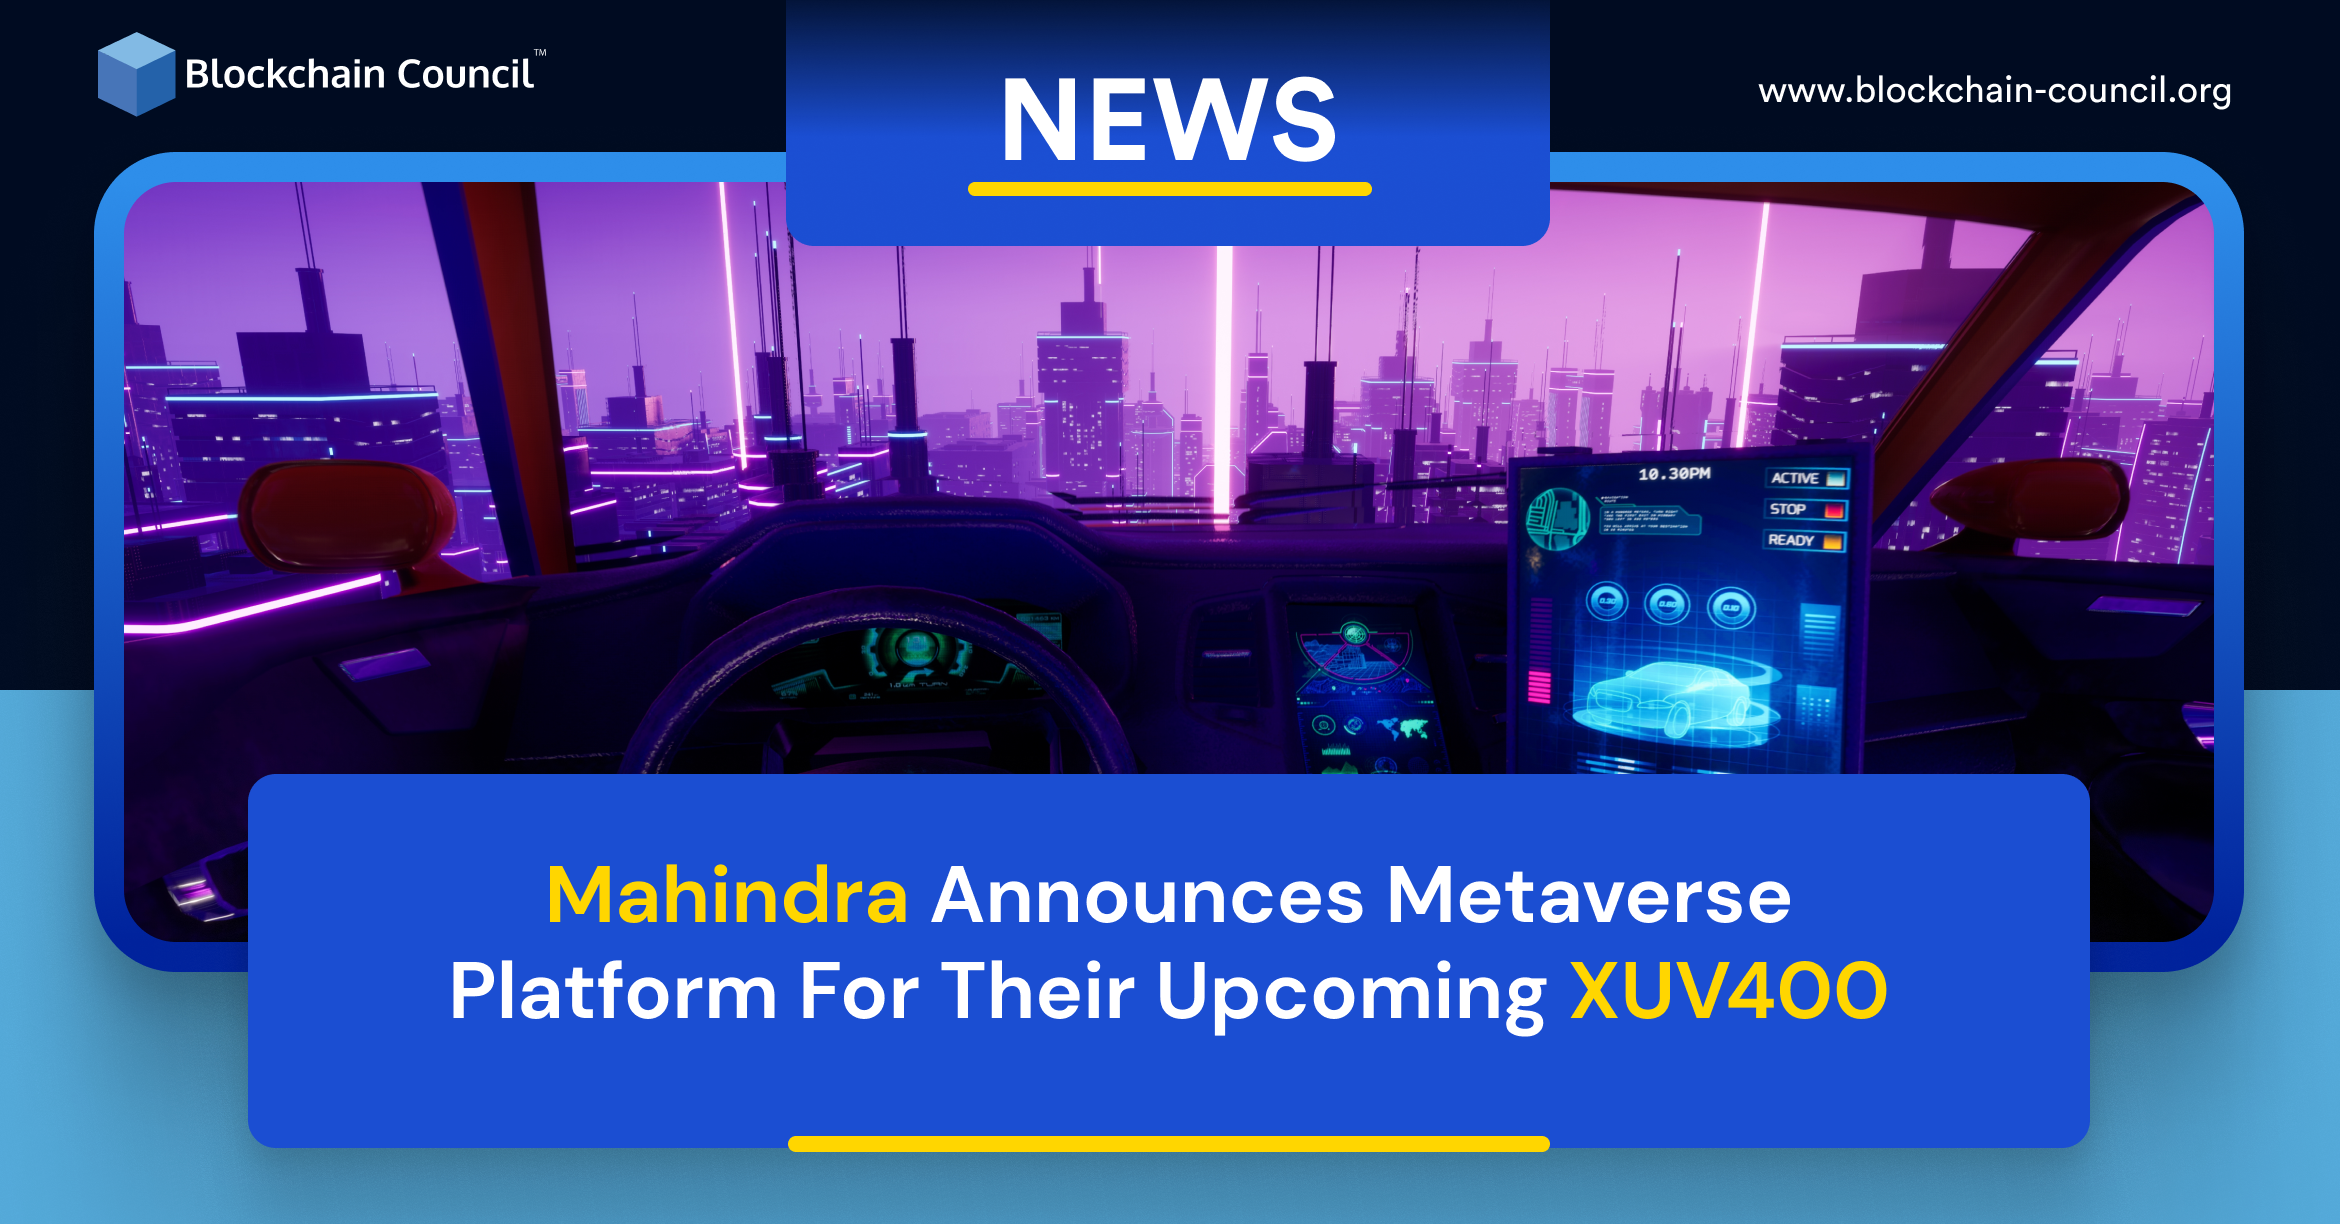 Mahindra Announces Metaverse Platform For Their Upcoming XUV400